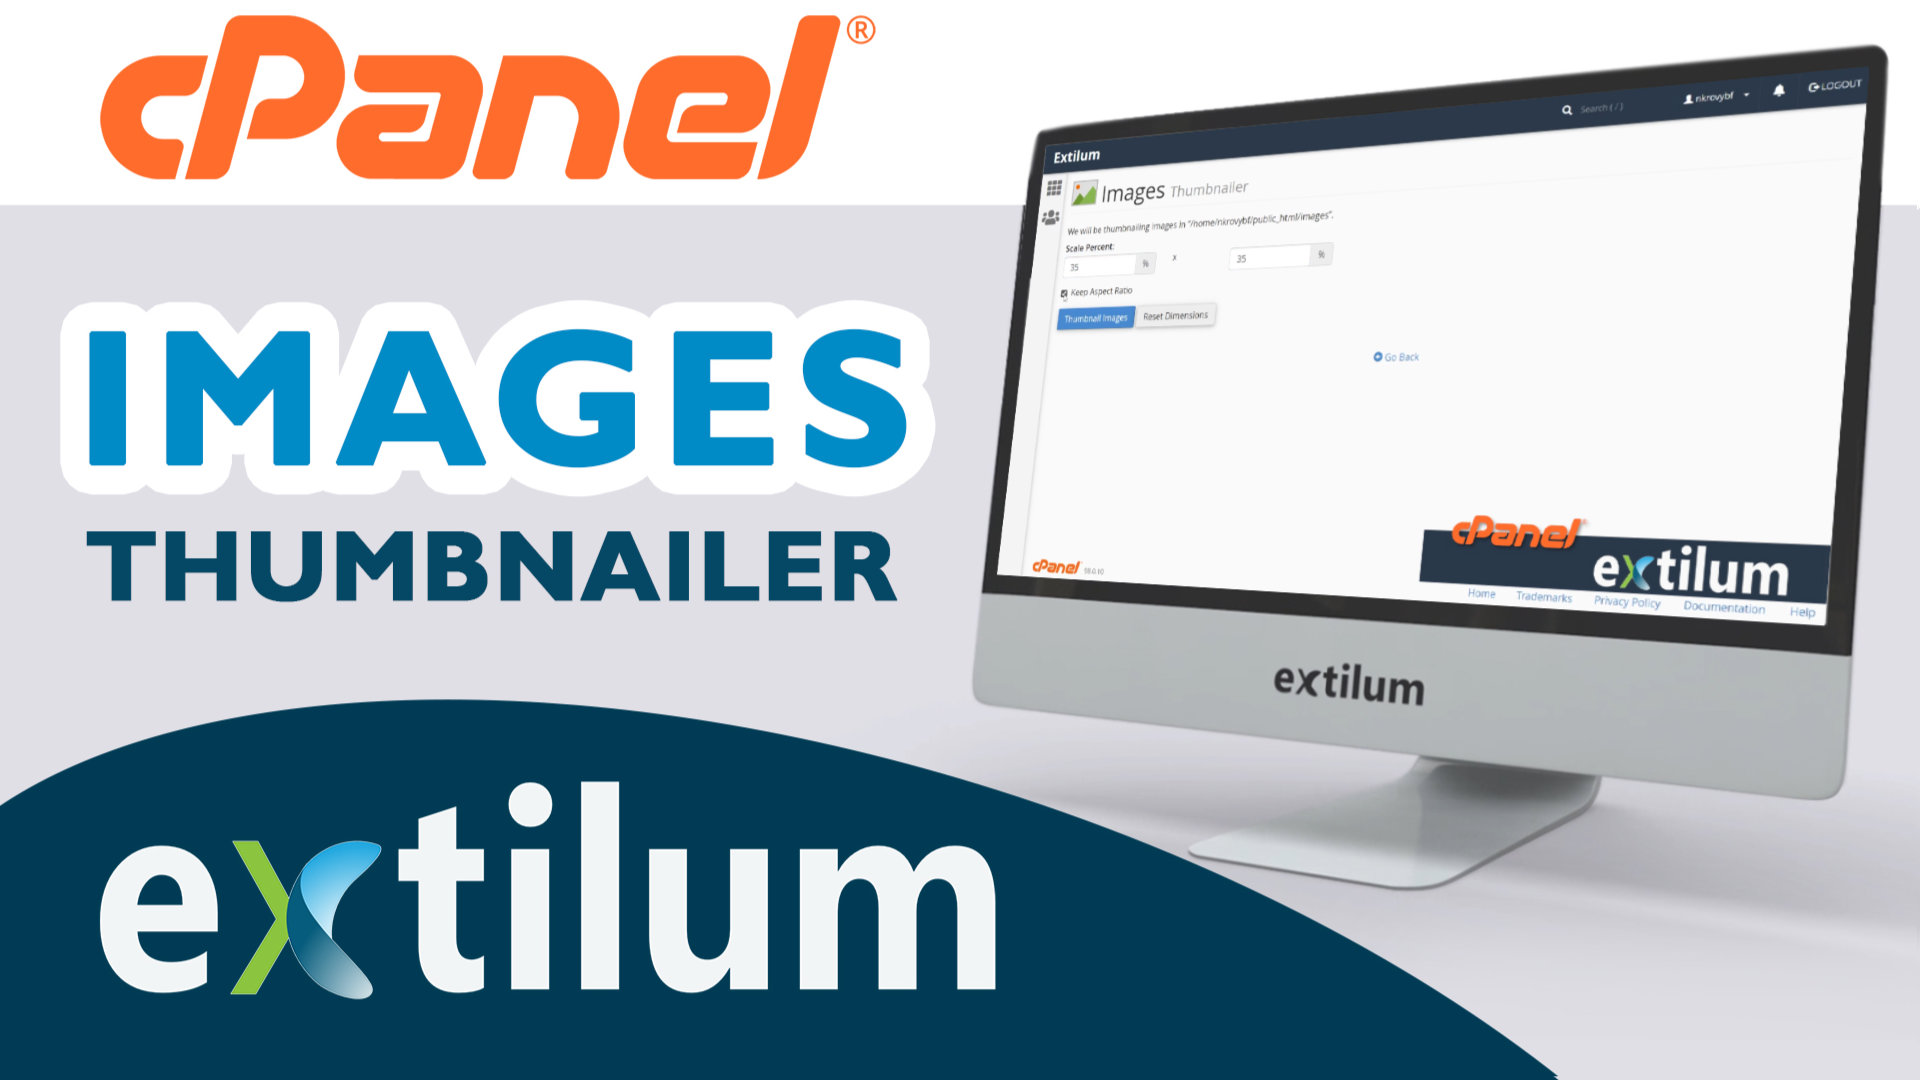 Extilum cpanel - images thumbnailer